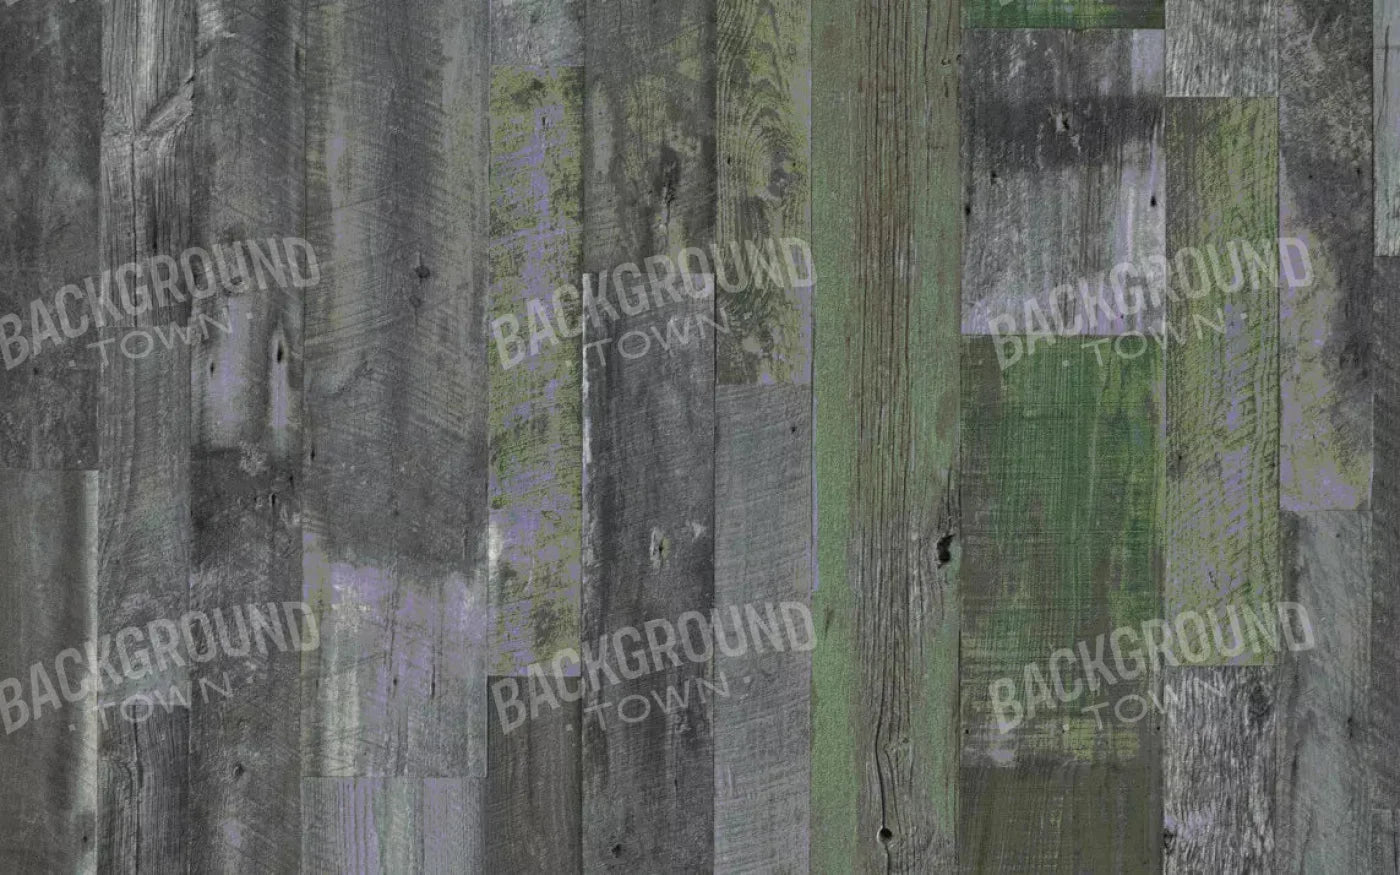 Evergreen 14X9 Ultracloth ( 168 X 108 Inch ) Backdrop